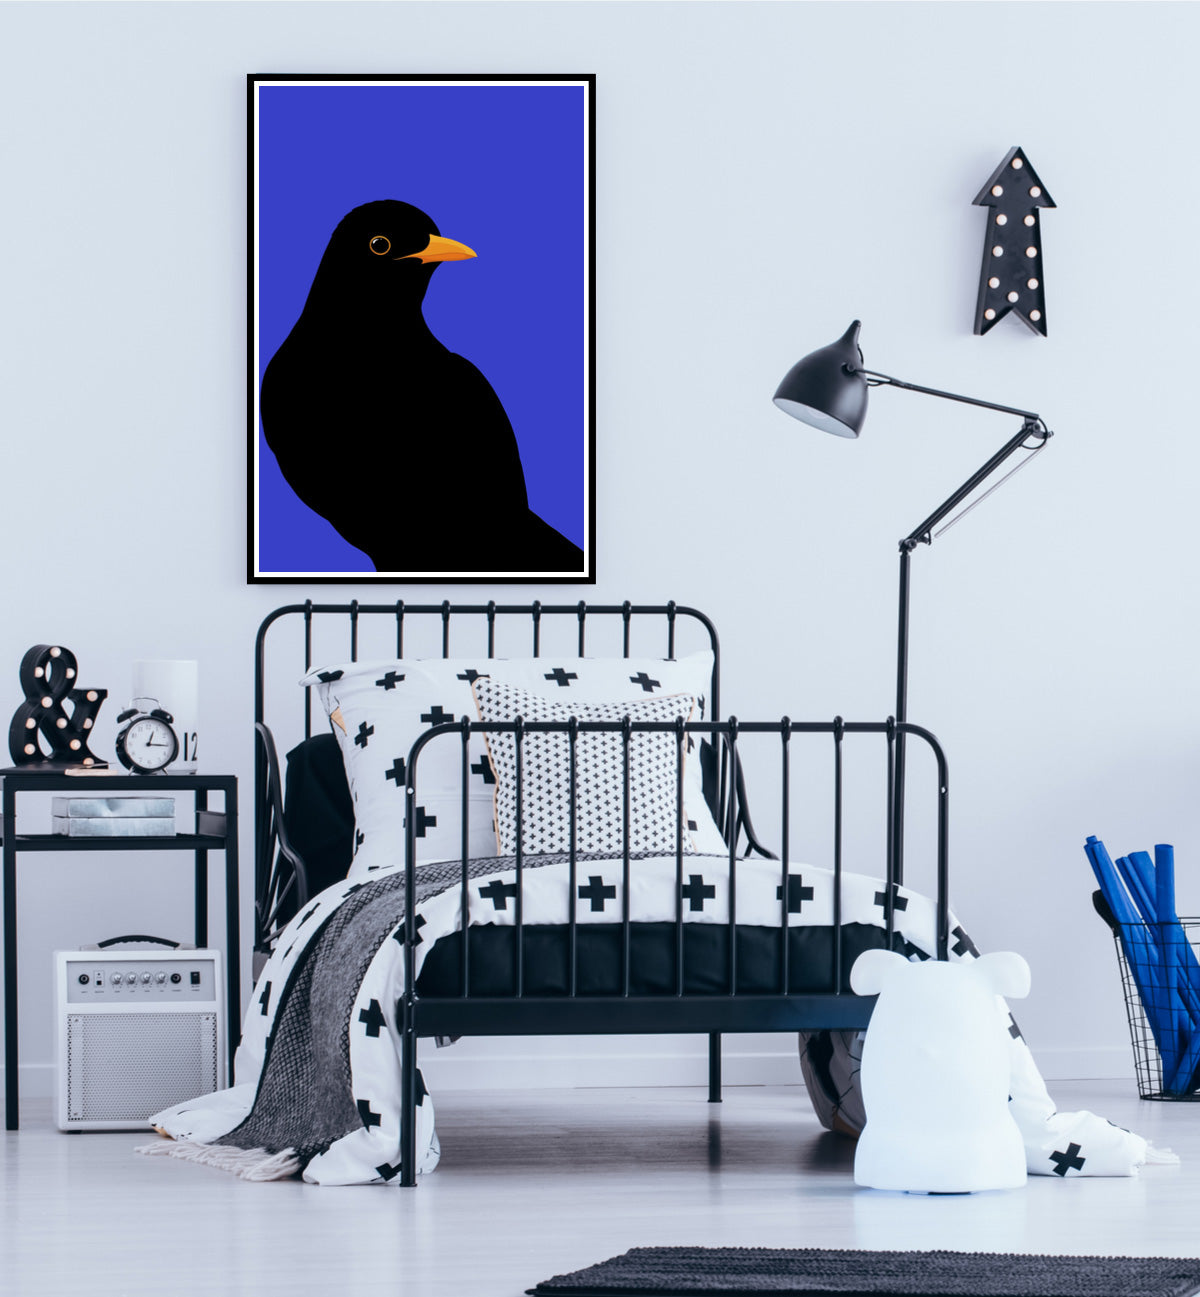 Framed art print of the Blackbird, New Zealand garden bird by Hansby Design, in minimal modern style